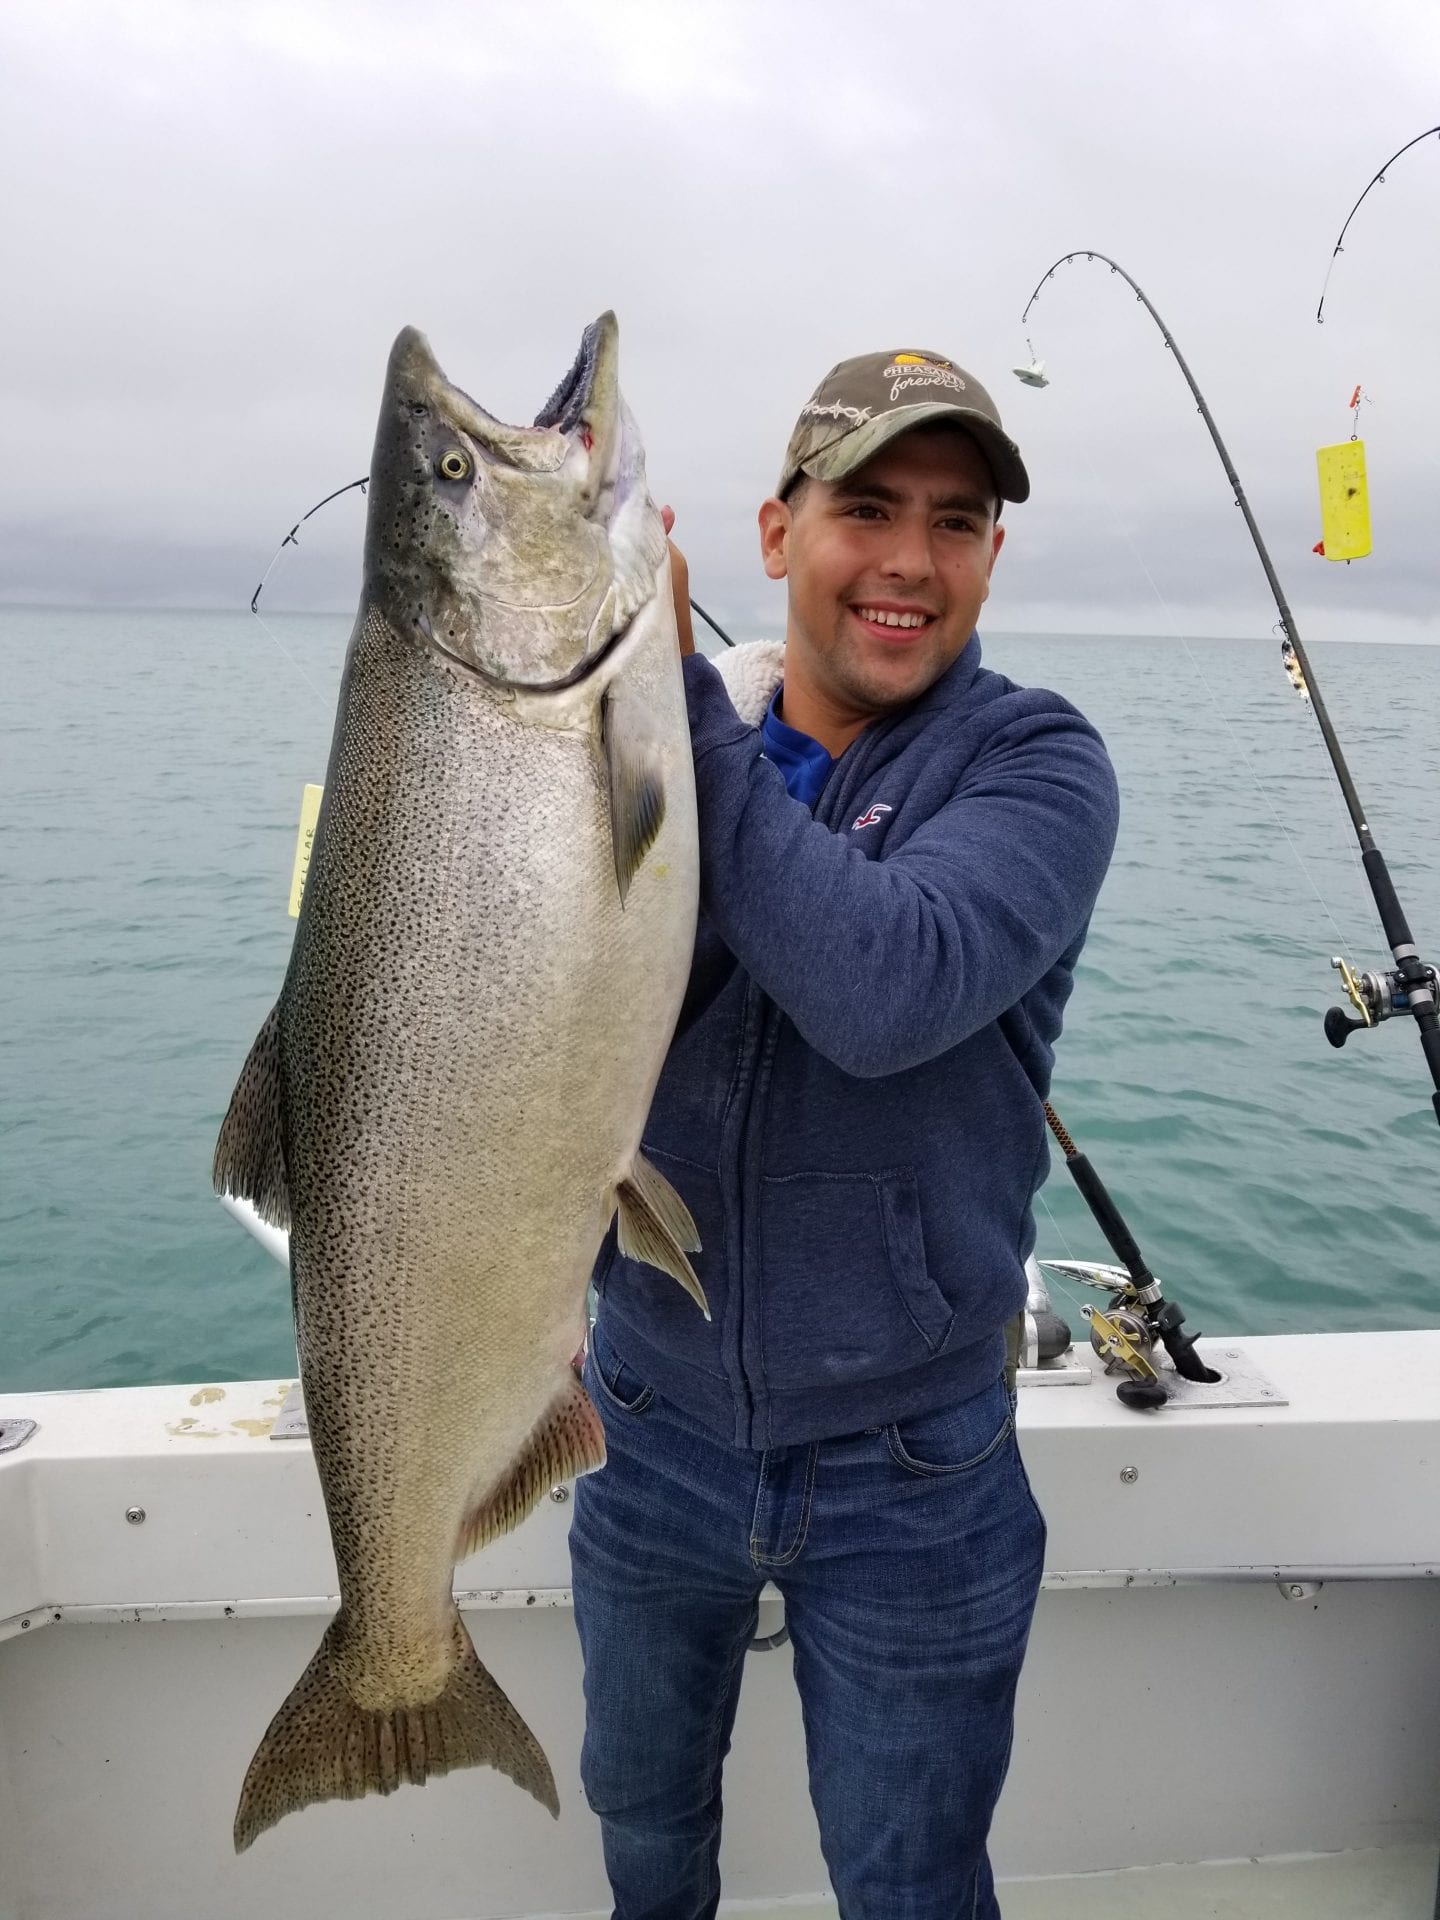 August 2018 fishing charter boat Kenosha, WI. Stellar Charters LLC Kenosha, Wisconsin